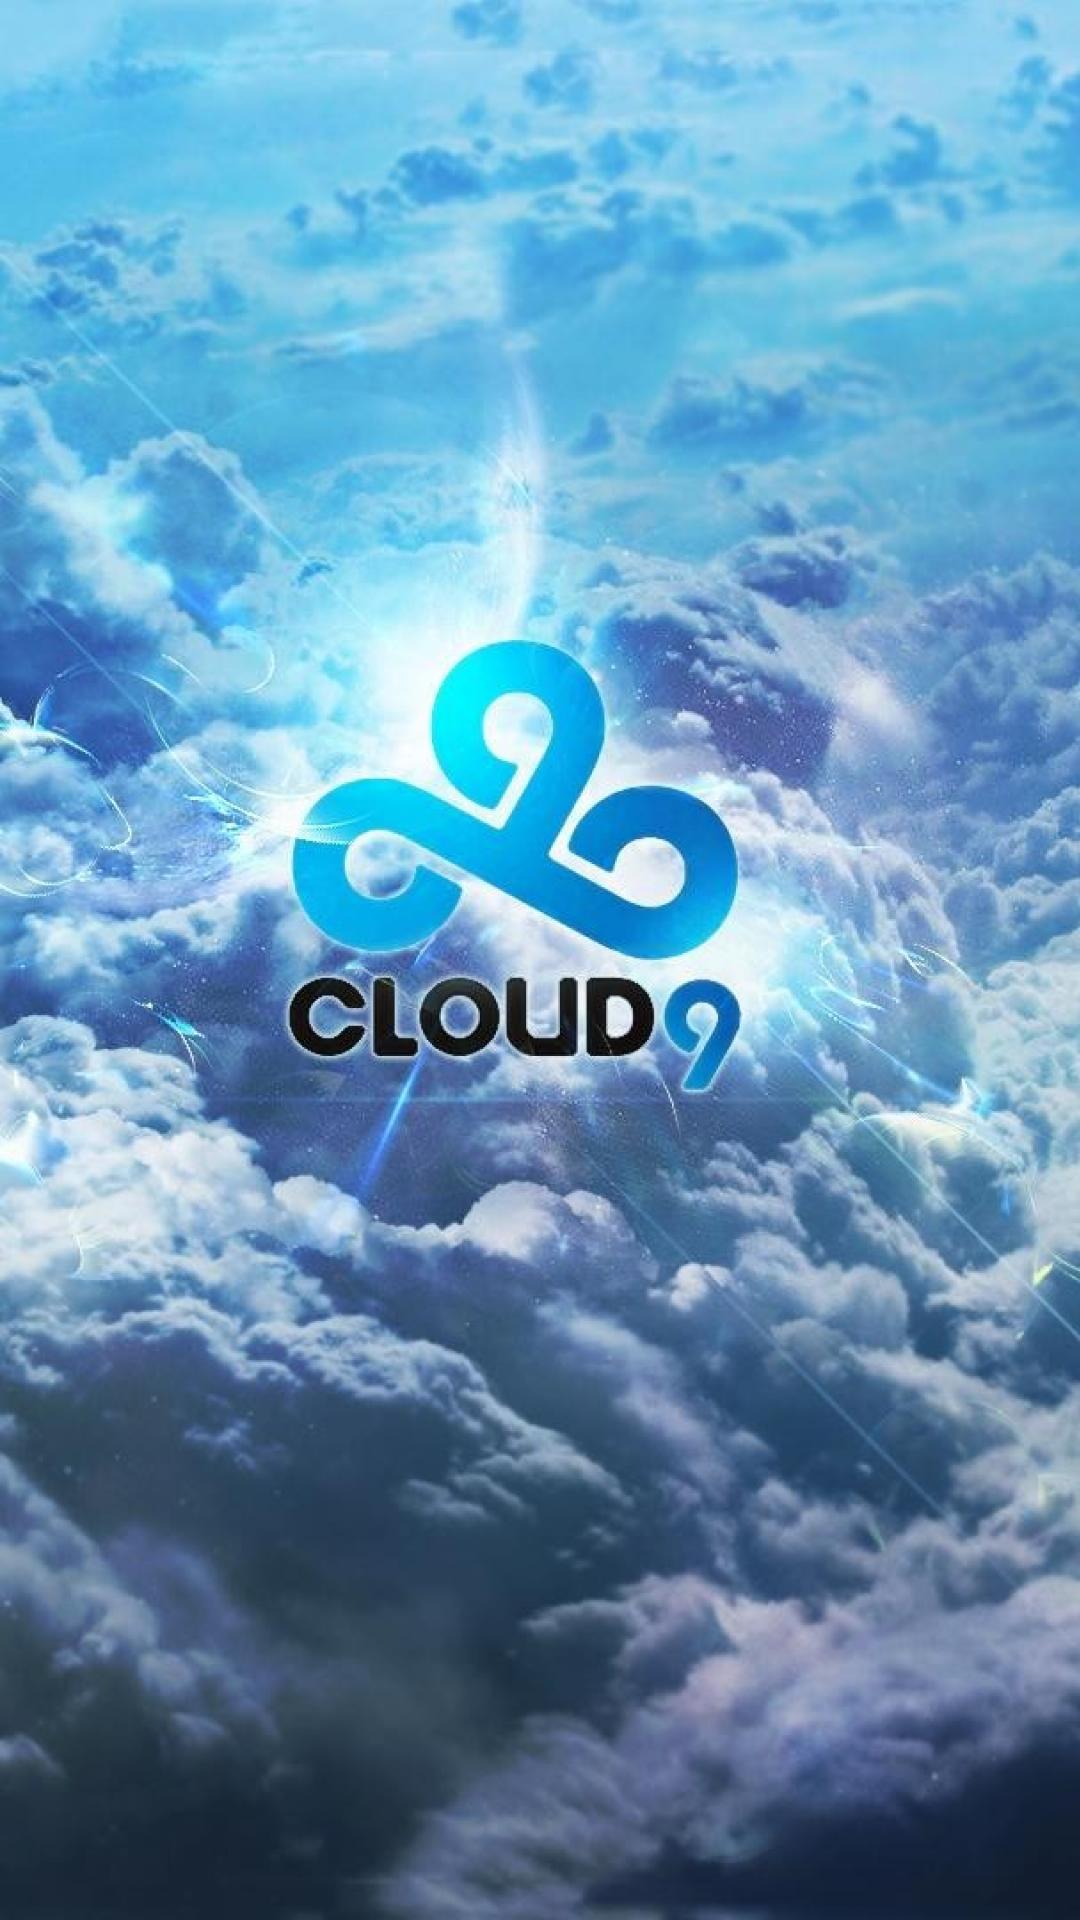 Clouds League Of Legends Wallpaper - Cloud 9 Wallpaper Mobile - HD Wallpaper 